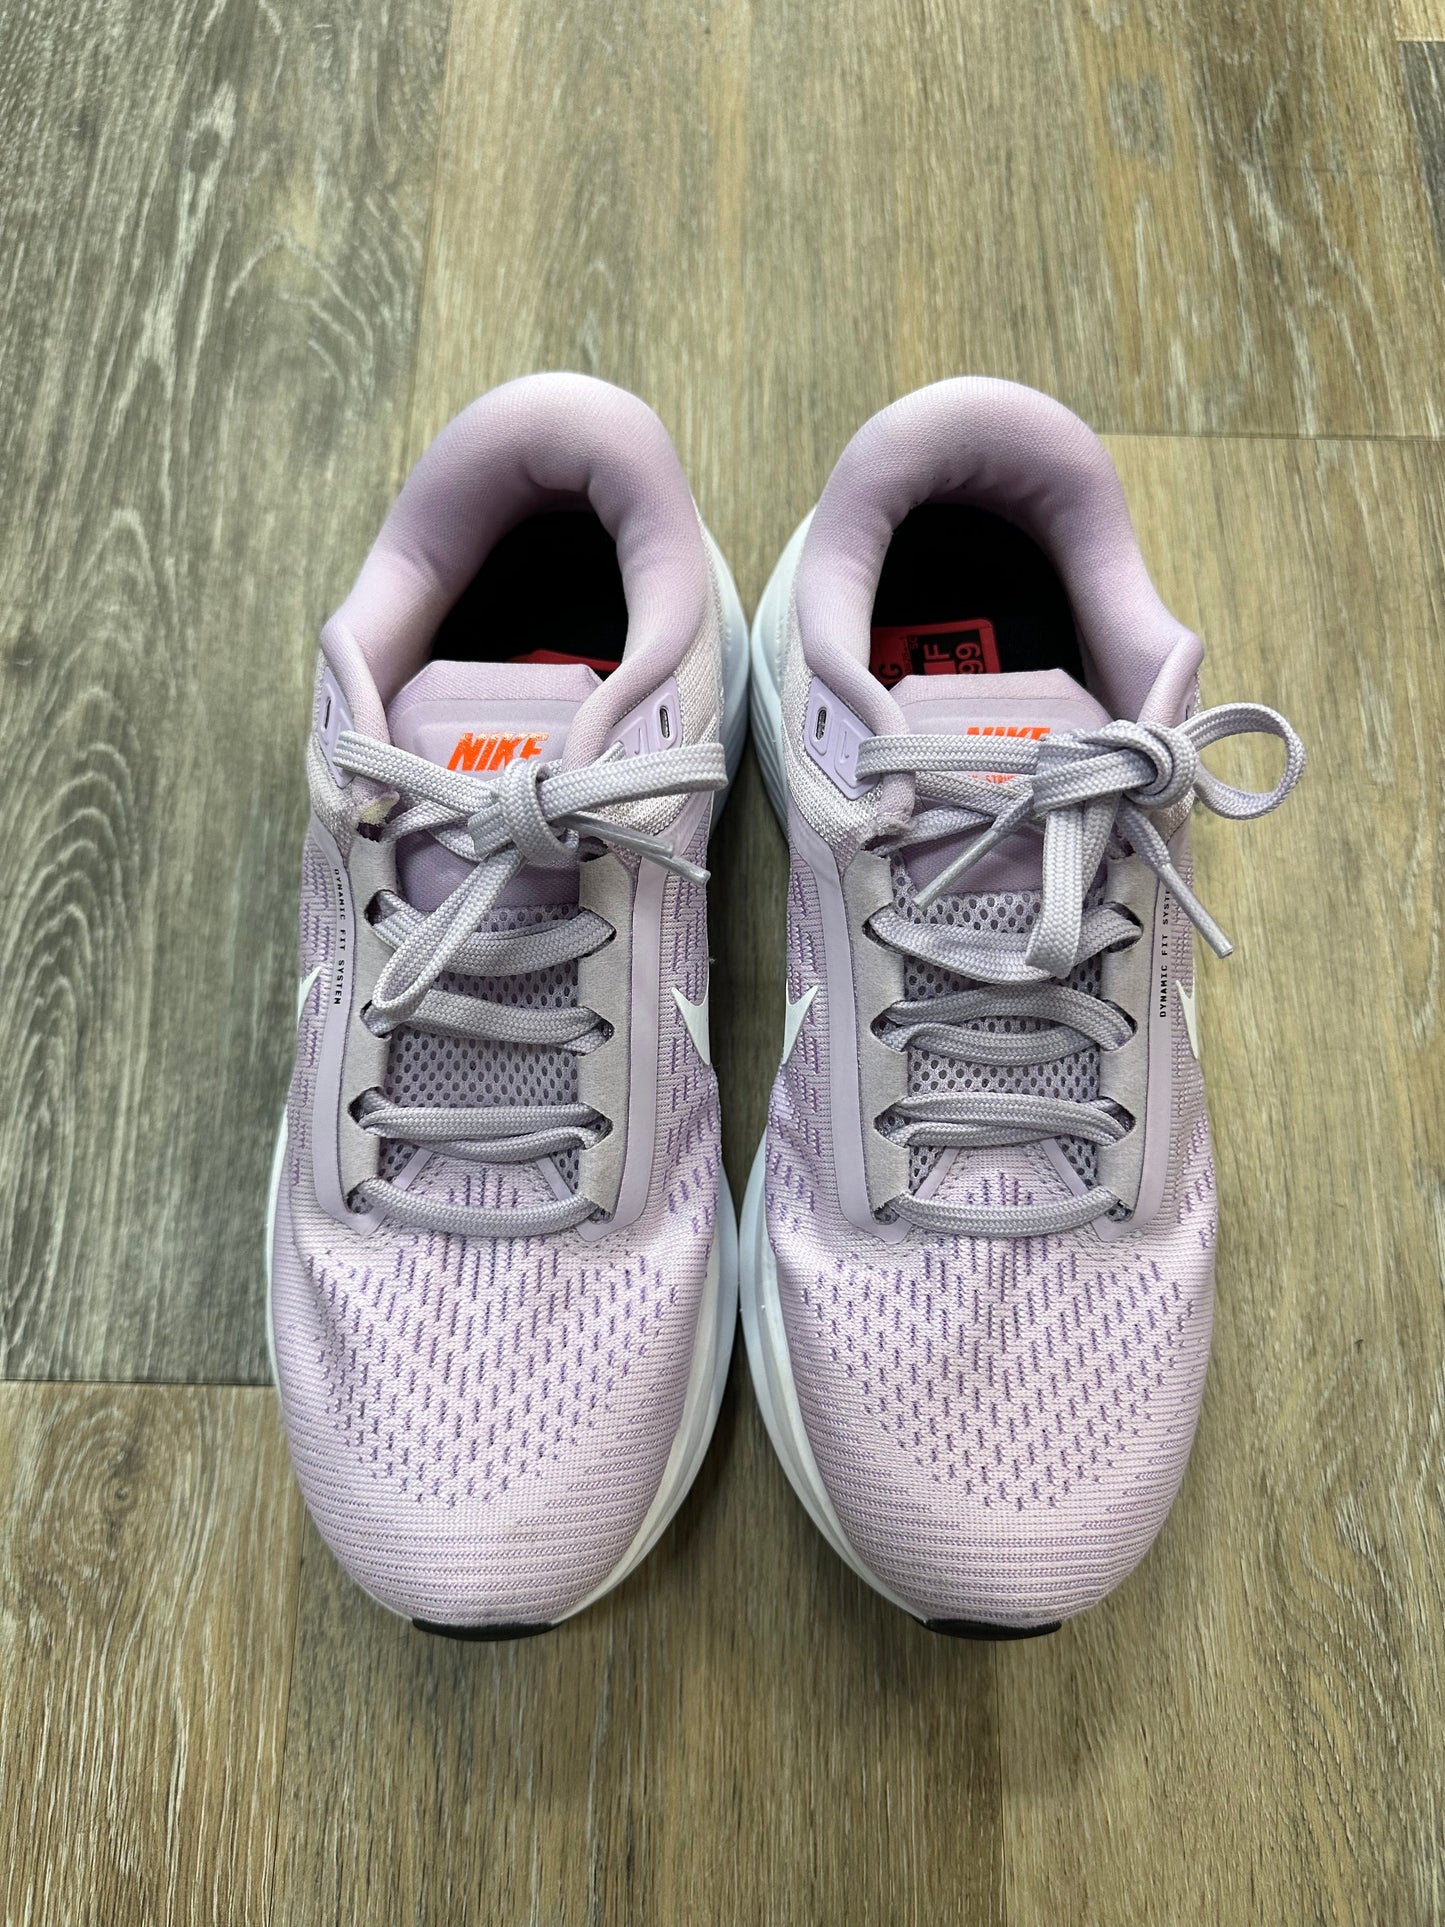 Purple Shoes Athletic Nike, Size 7.5